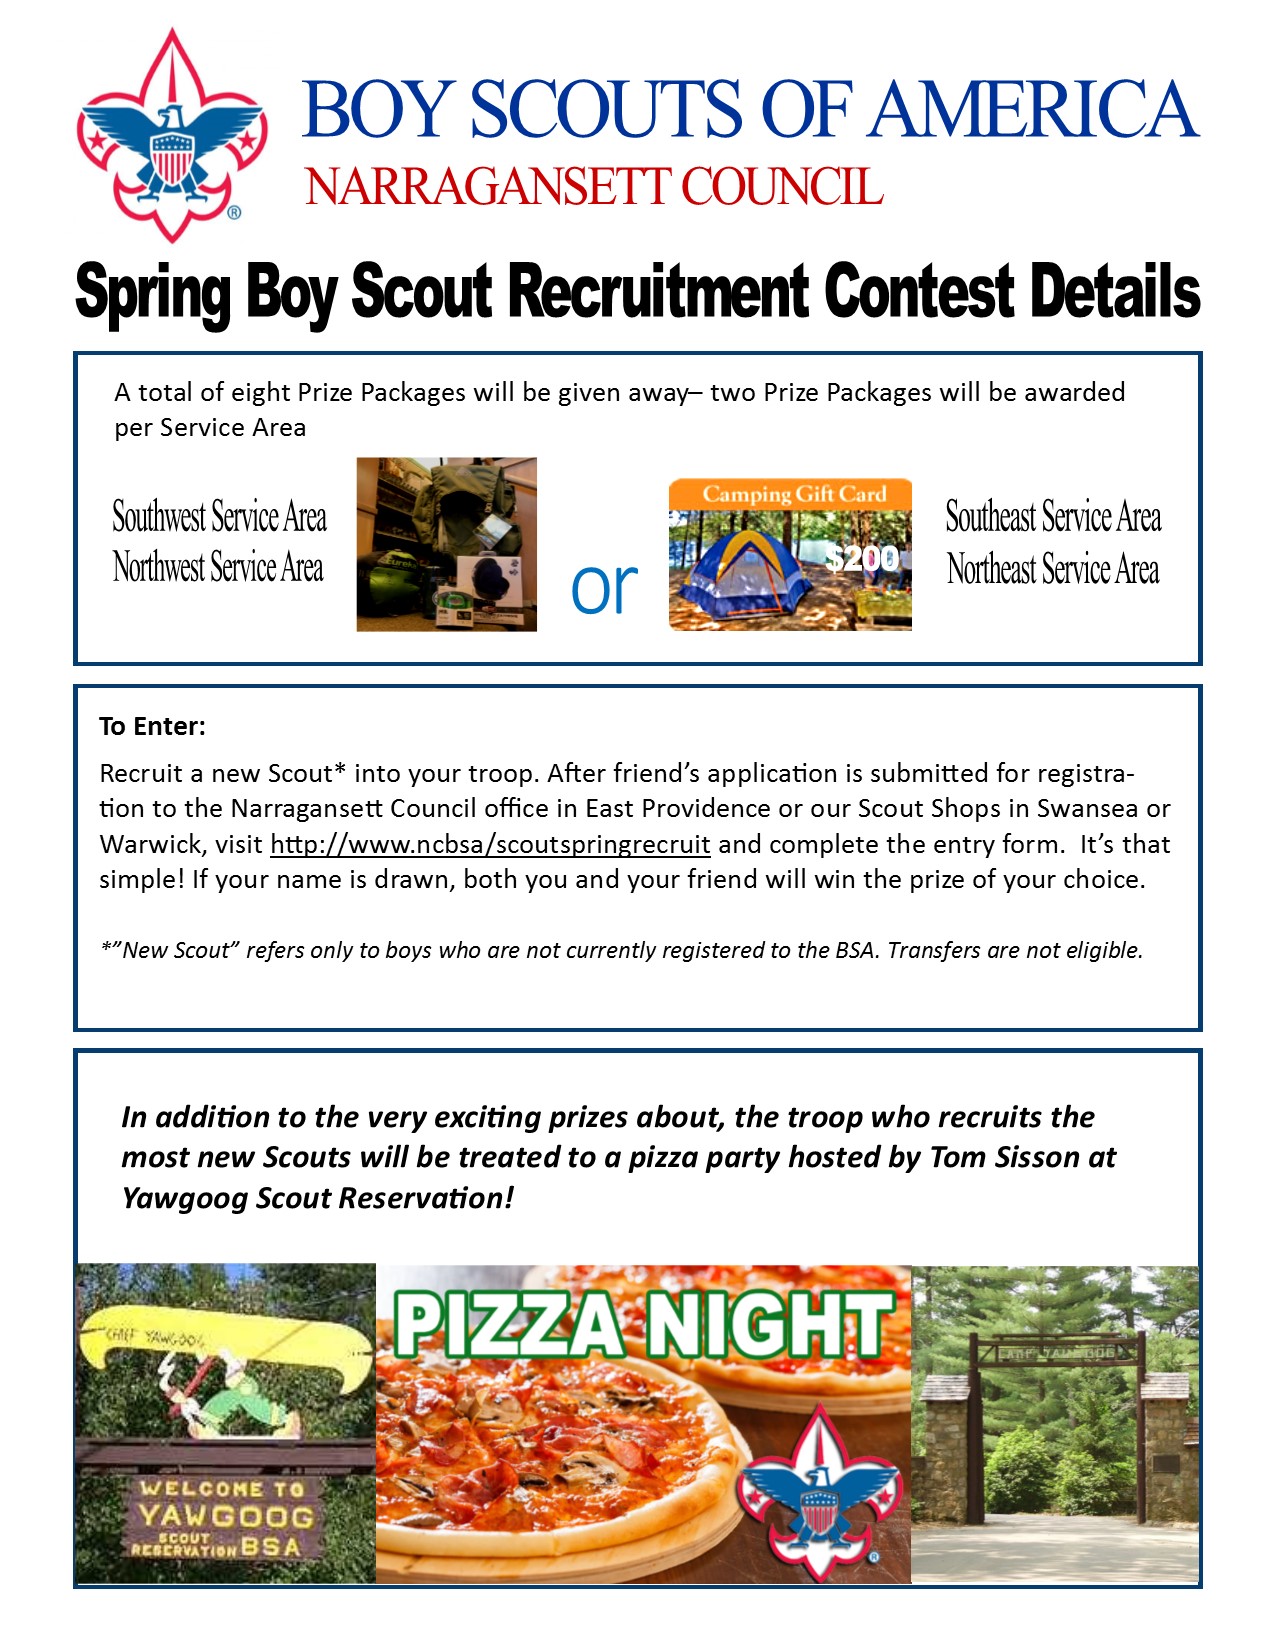 boy scout troop recruitment flyer template, boy scout recruitment flyer template, bsa recruitment flyer template, bsa recruiting poster, cub scout recruitment poster